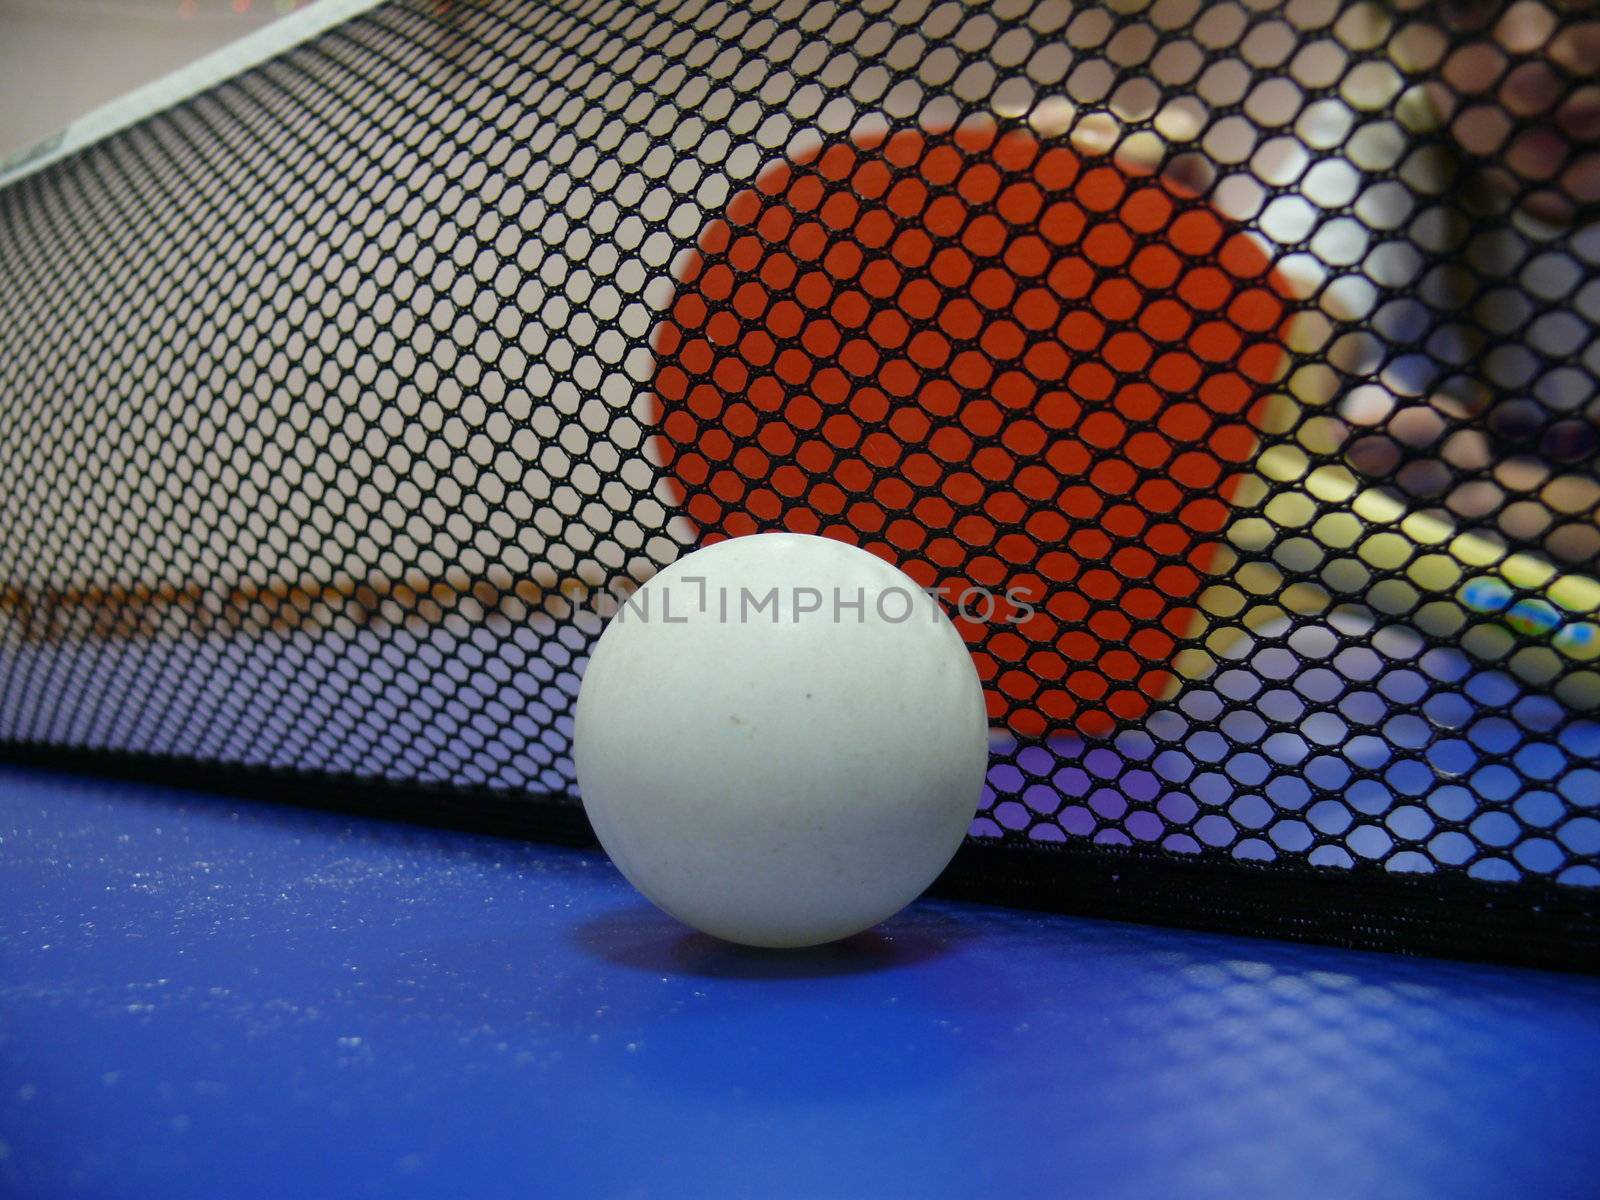 Pingpong ball and racket by Stoyanov